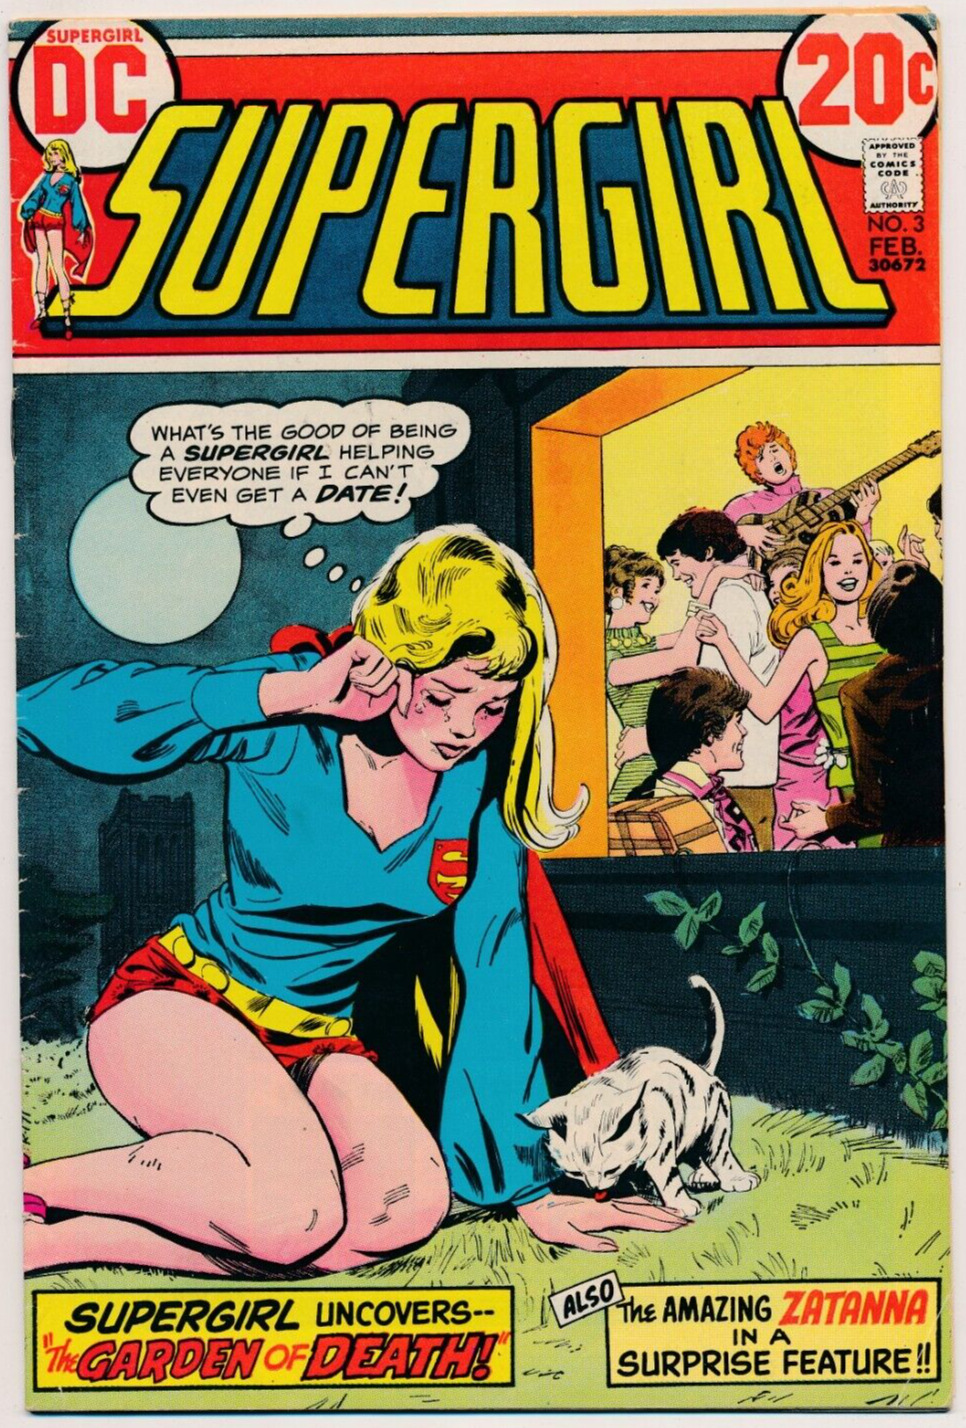 Supergirl (DC, 1972 series) #3 VG